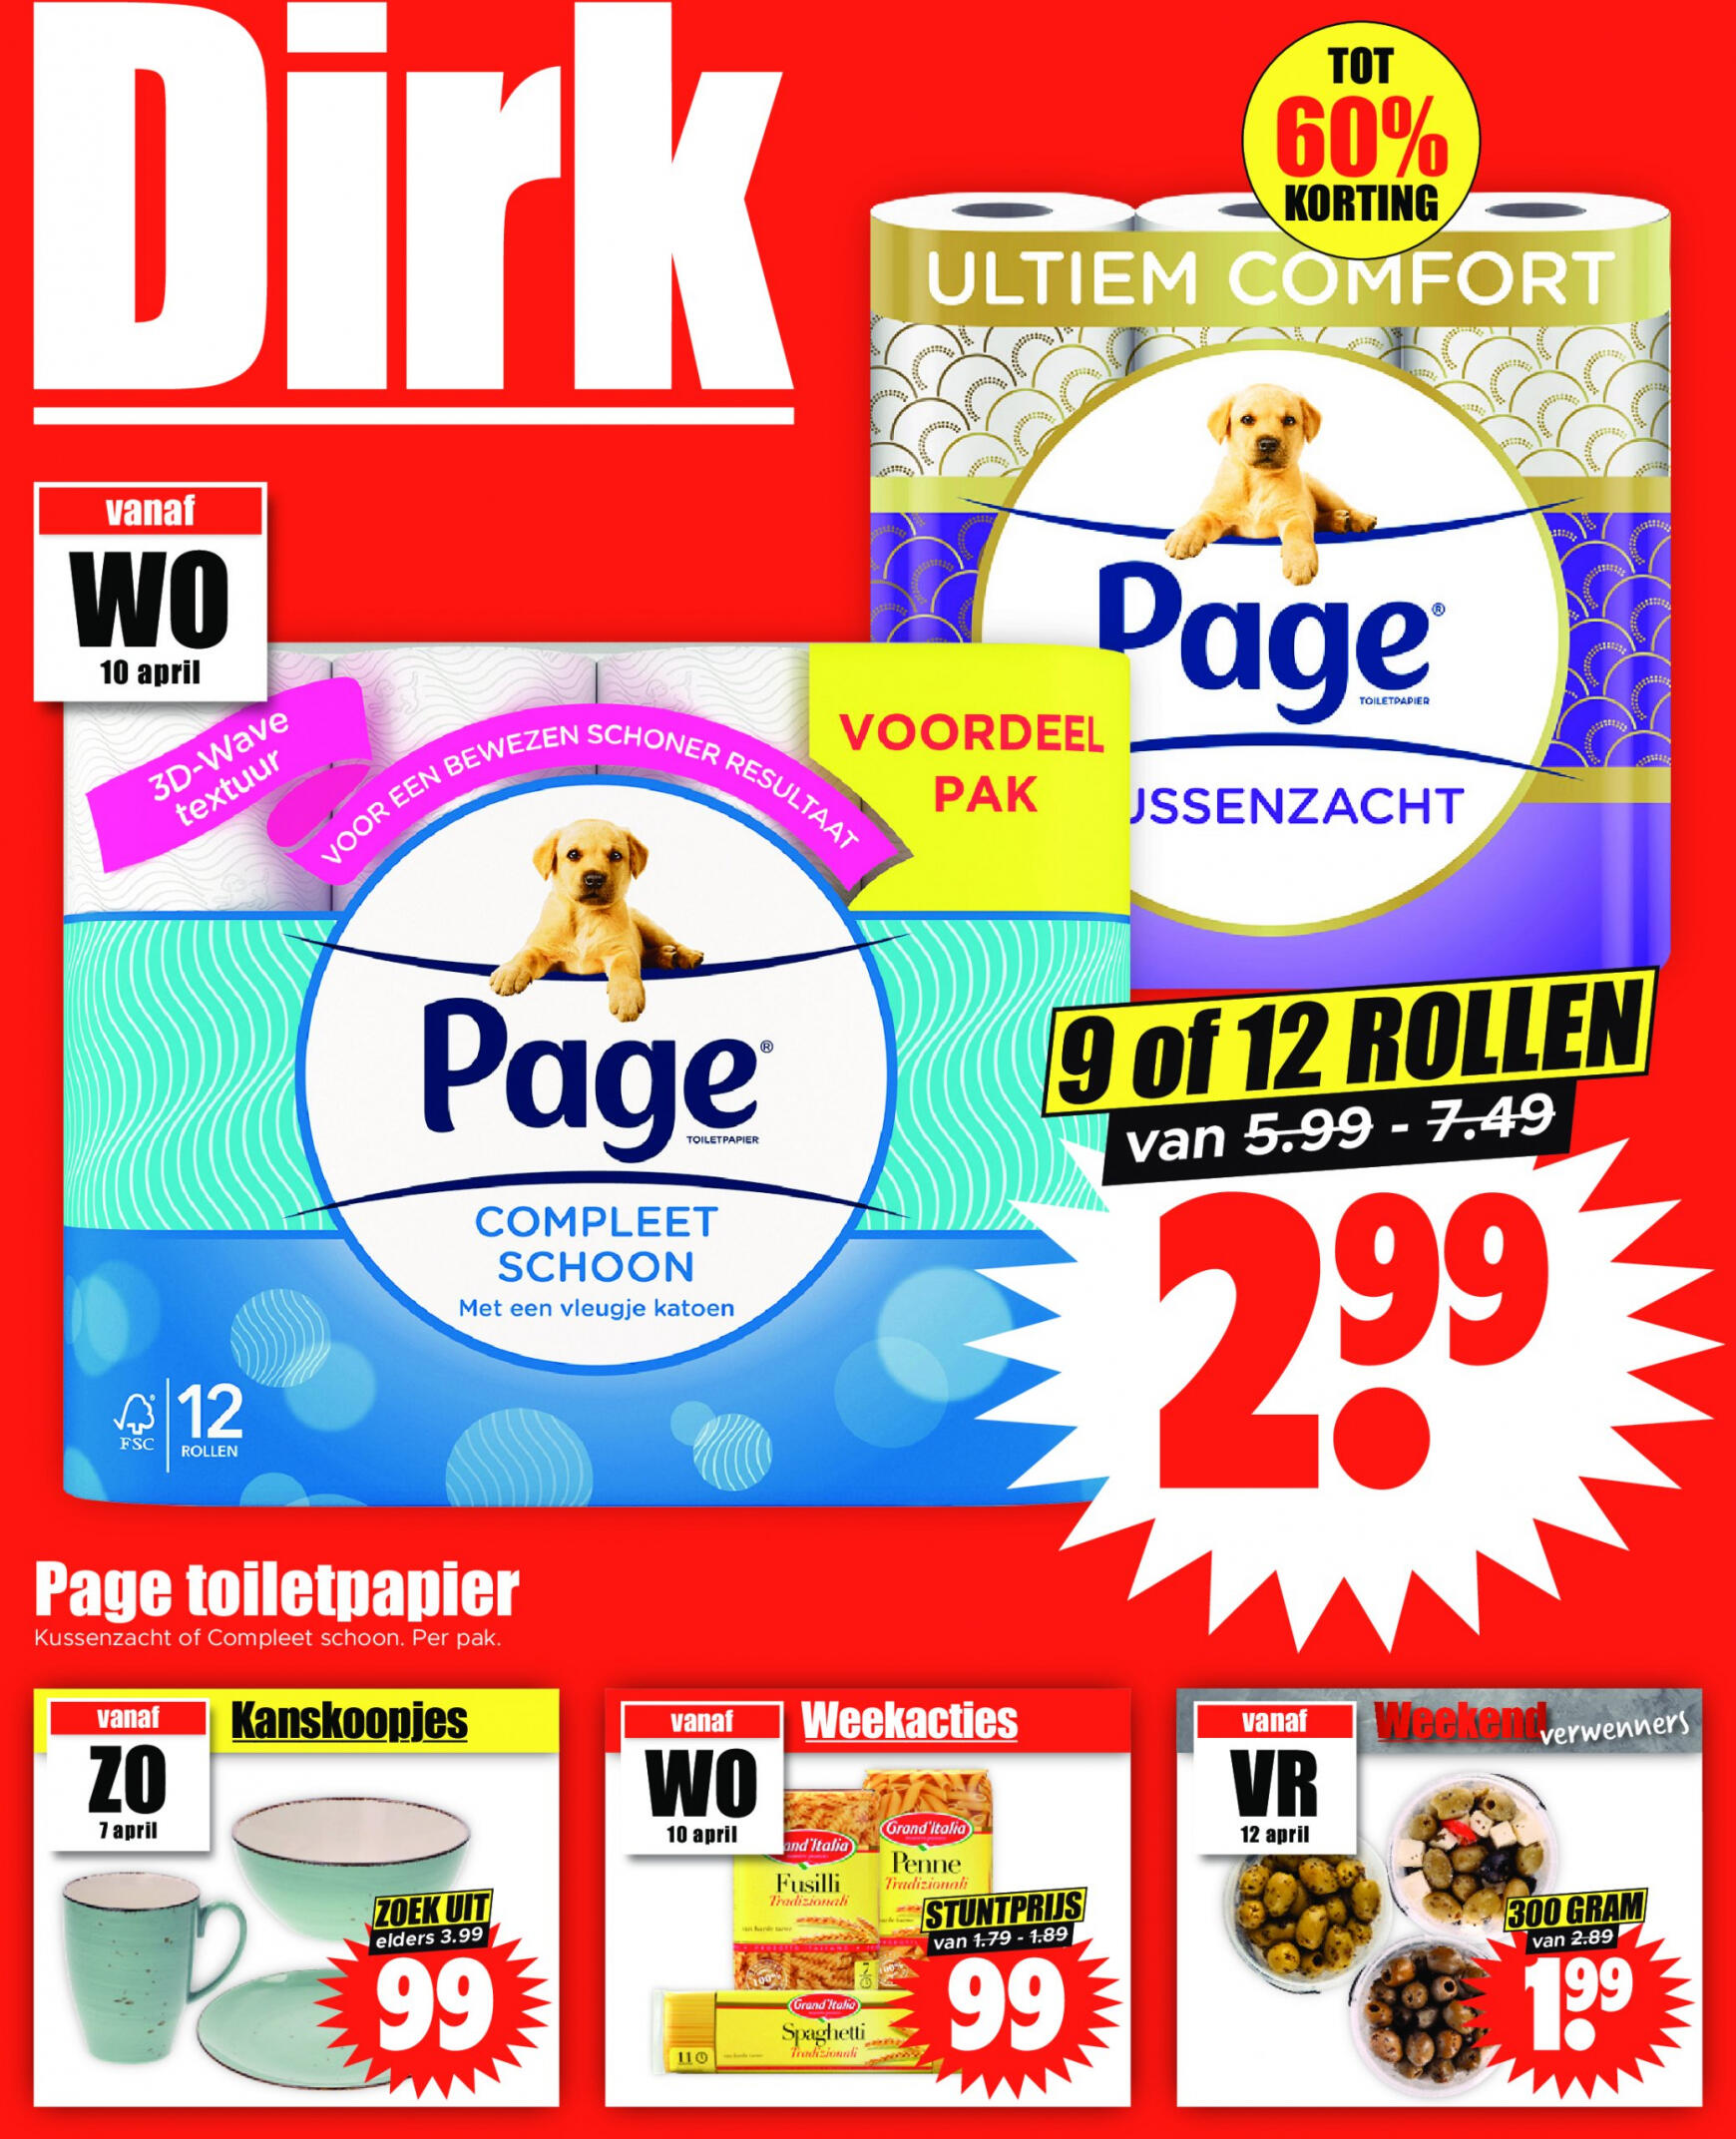 dirk - Dirk folder huidig 10.04. - 16.04. - page: 1